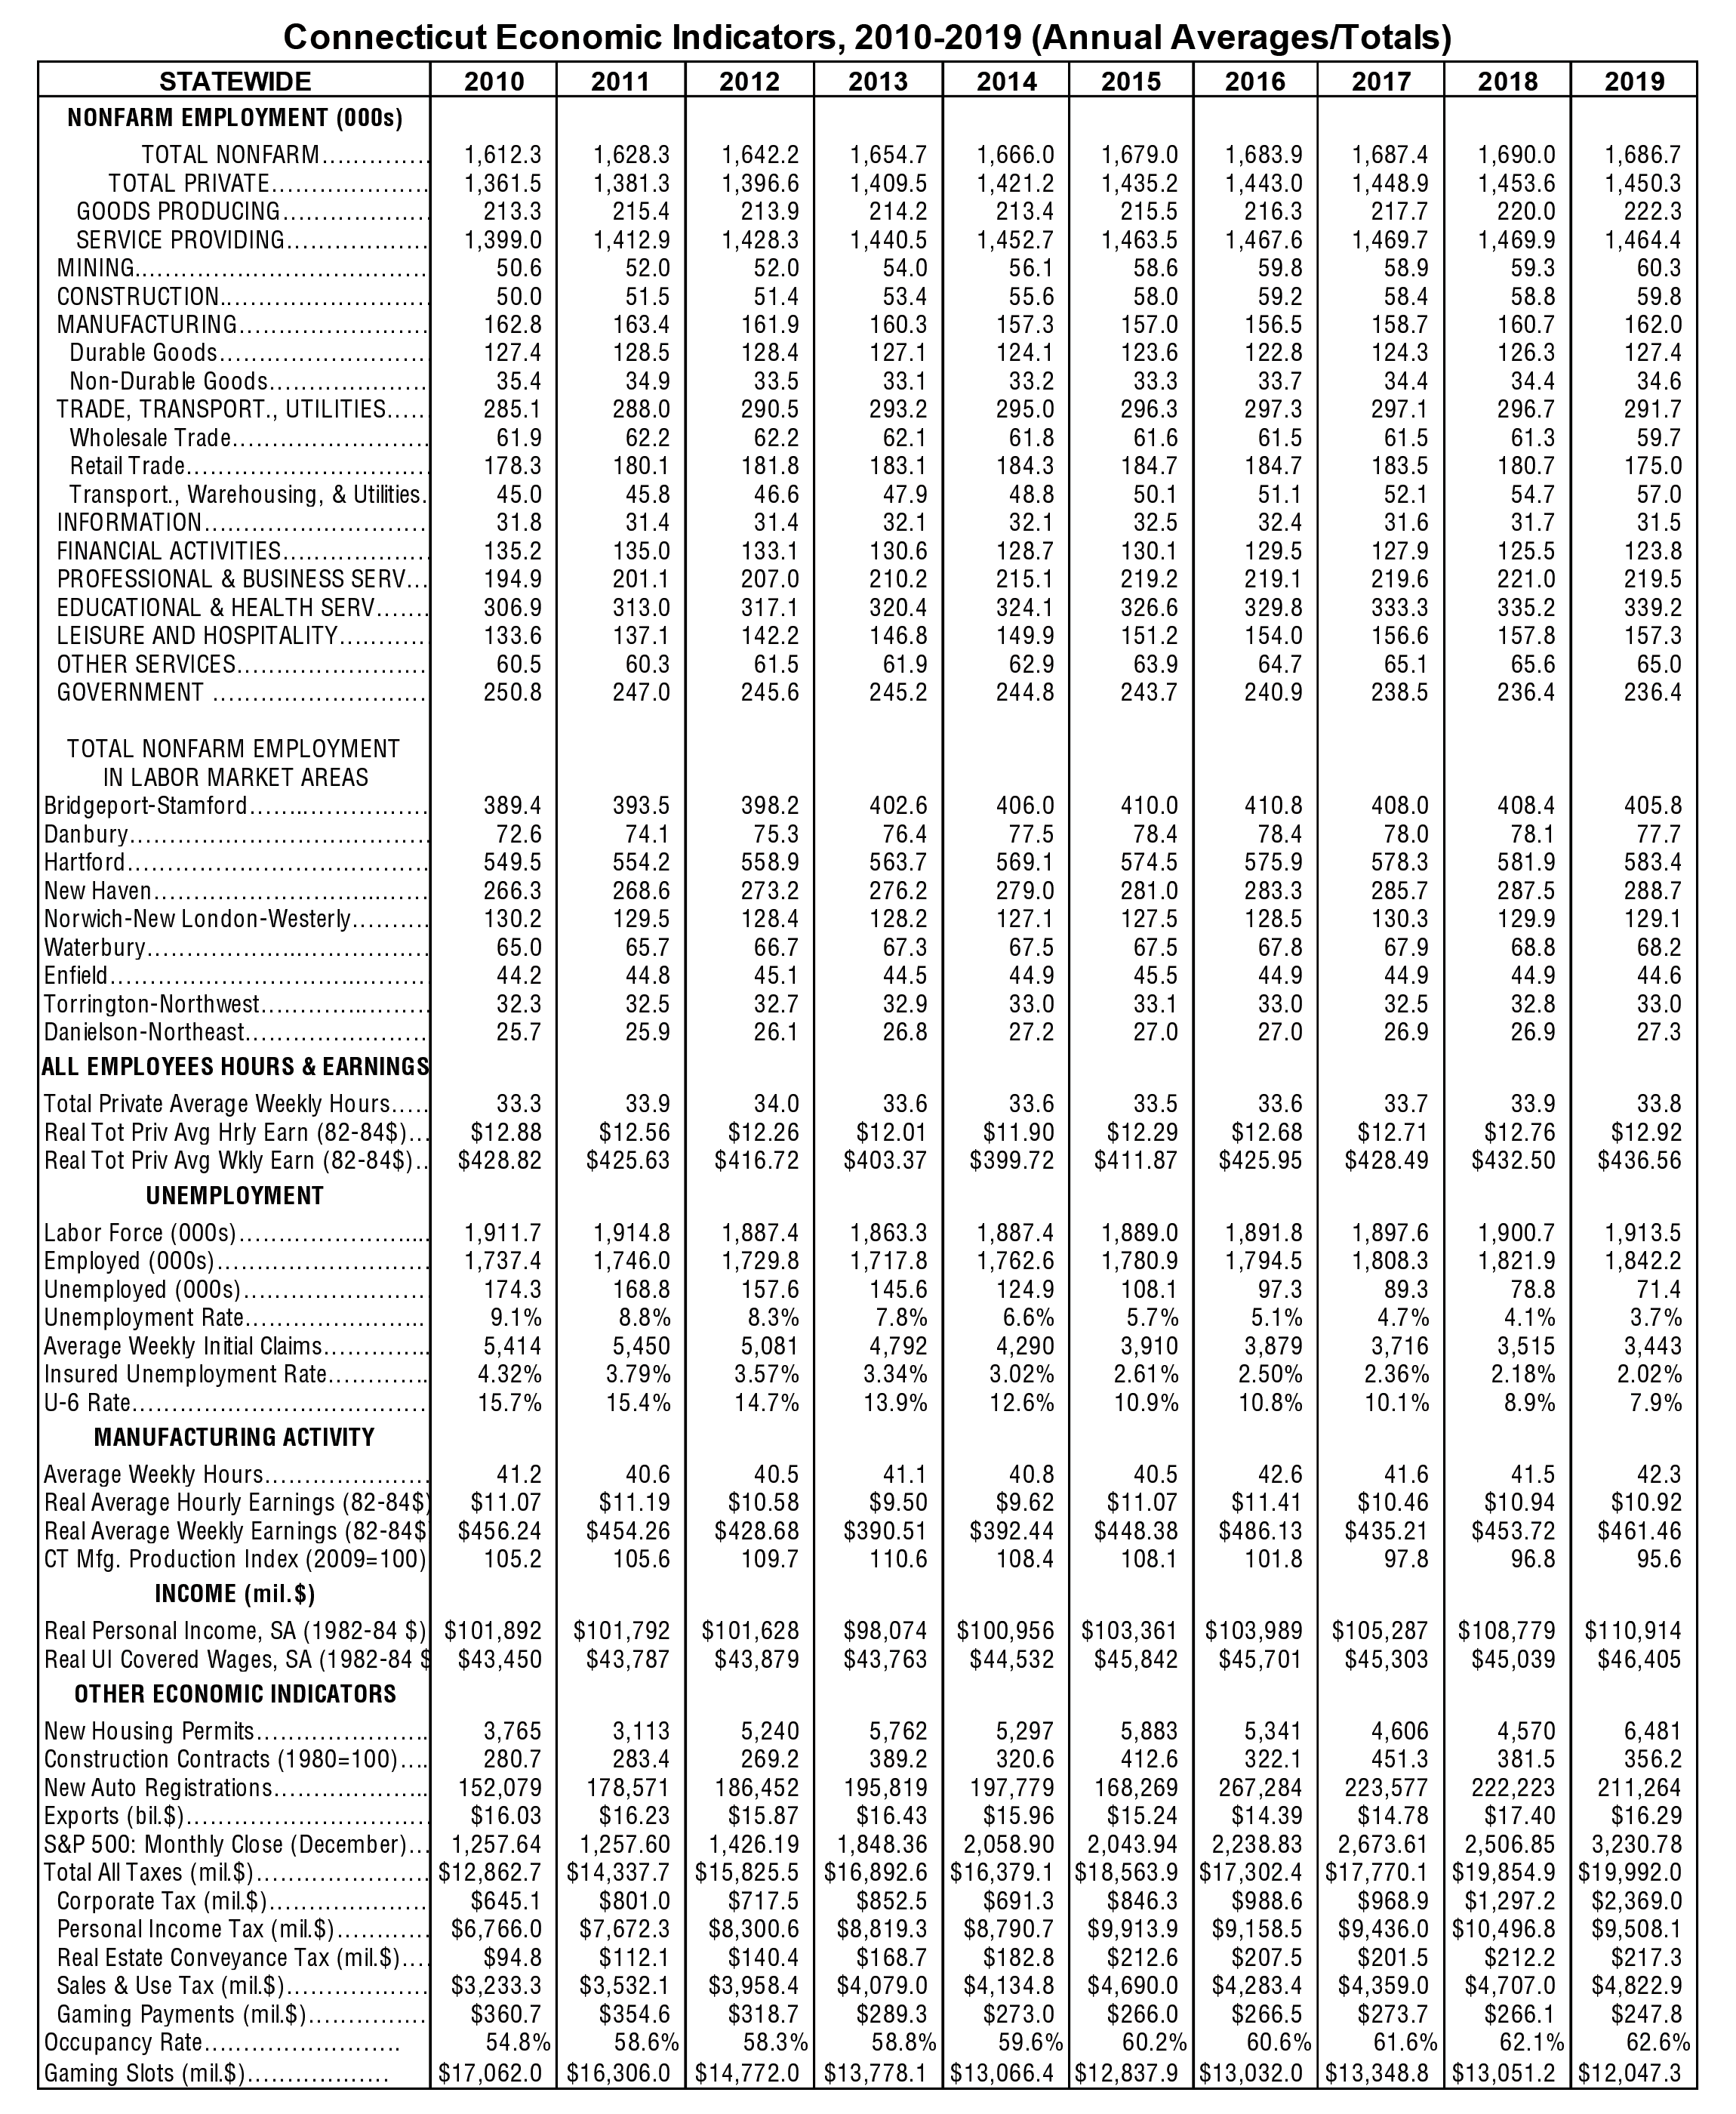 Table 1. Connecticut Economic Indicators, 2010-2019 (Annual Averages/Totals)